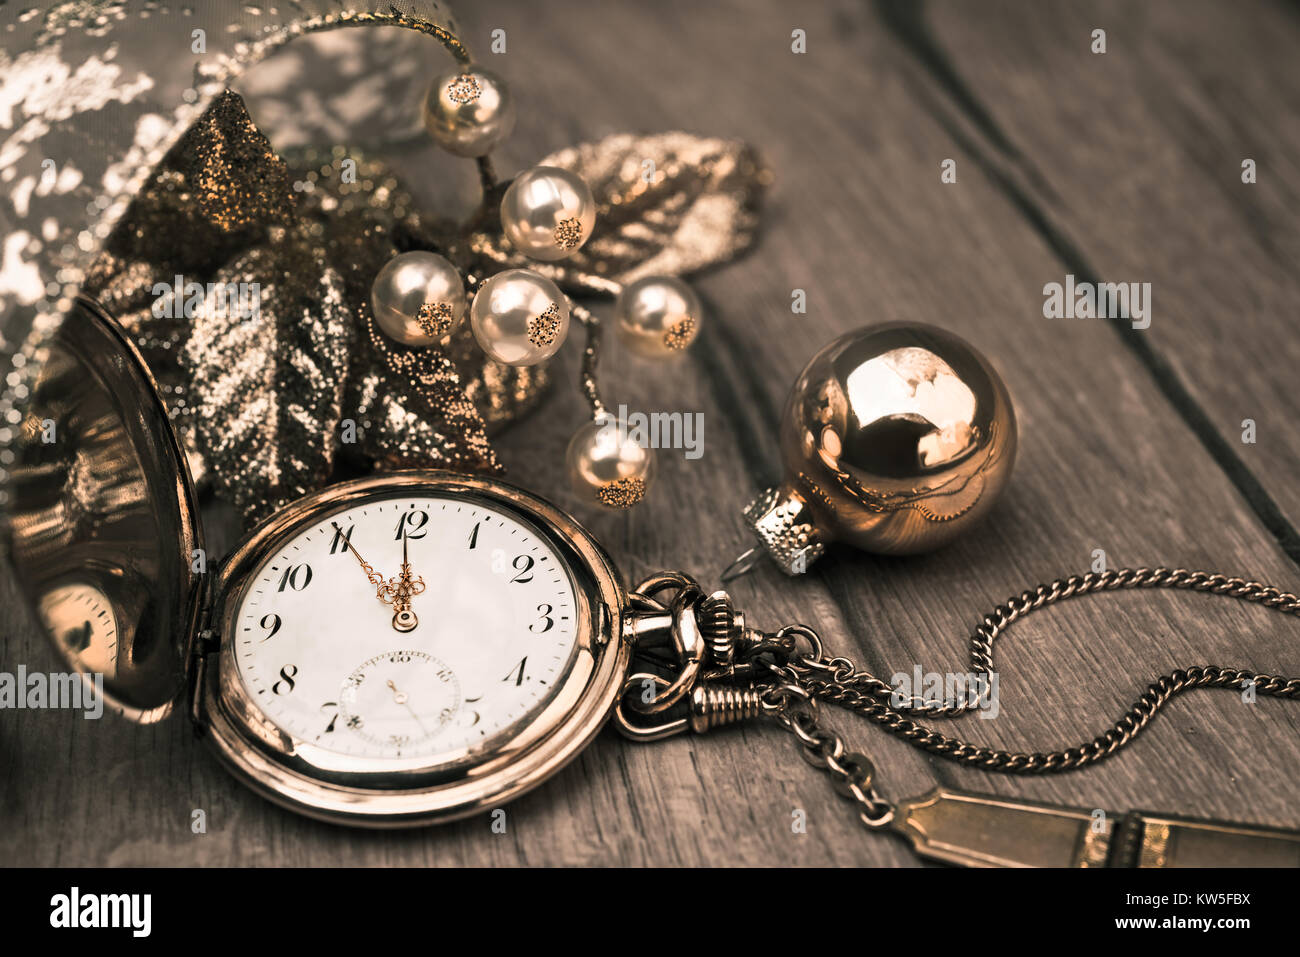 Reloj de bolsillo de juguete fotografías e imágenes de alta resolución -  Alamy